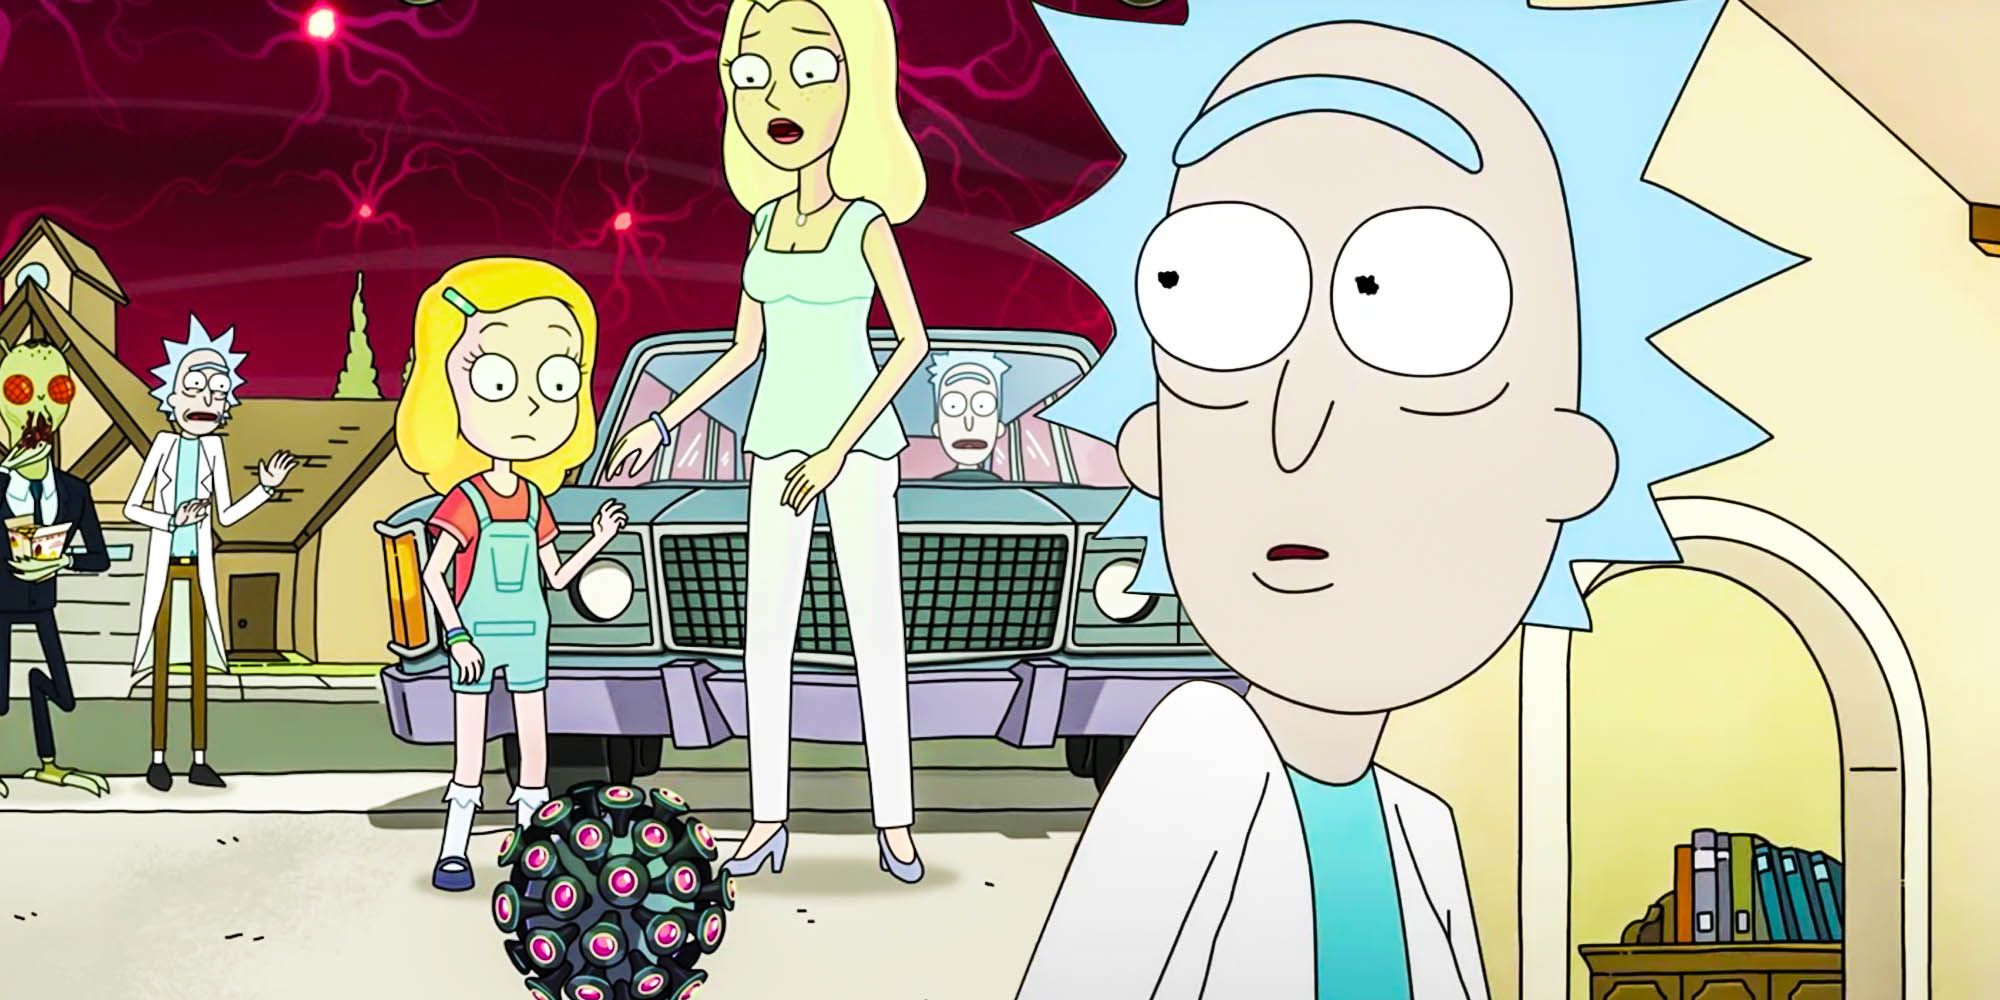 Rick and Morty Season 5 Confirms Ricks Season 3 Backstory Lie fabricated memory of wifes death